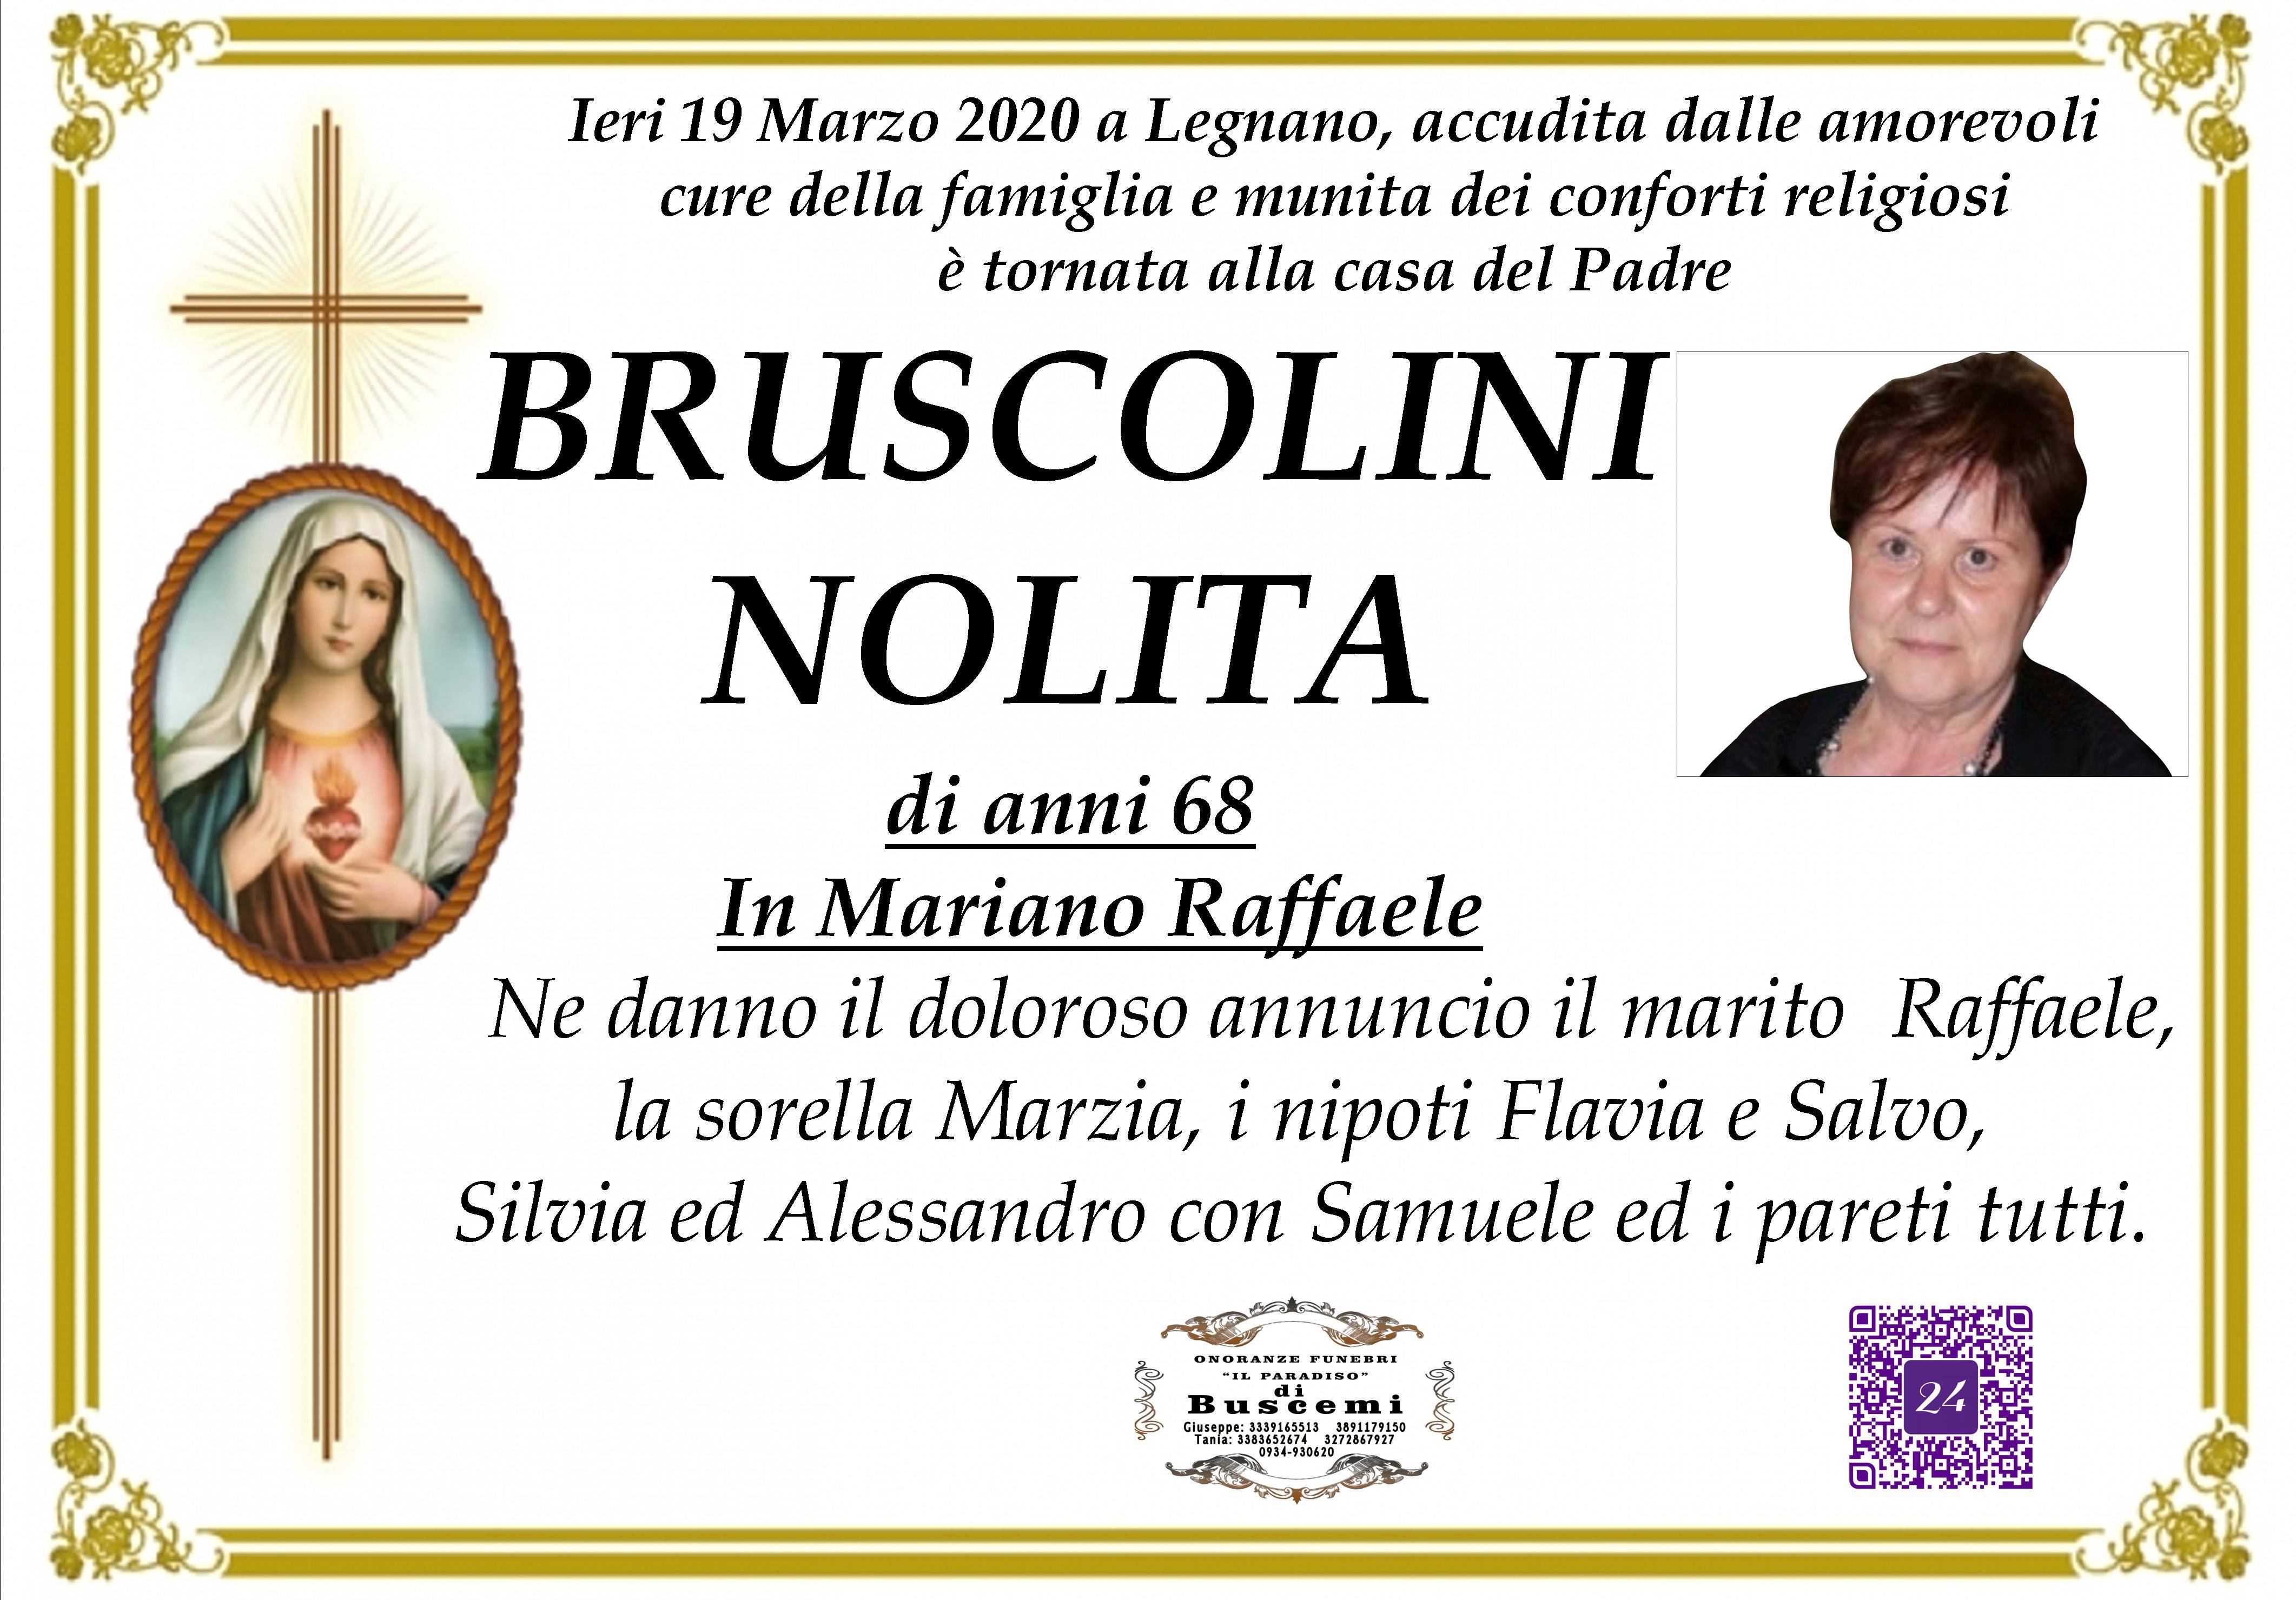 Nolita Bruscolini